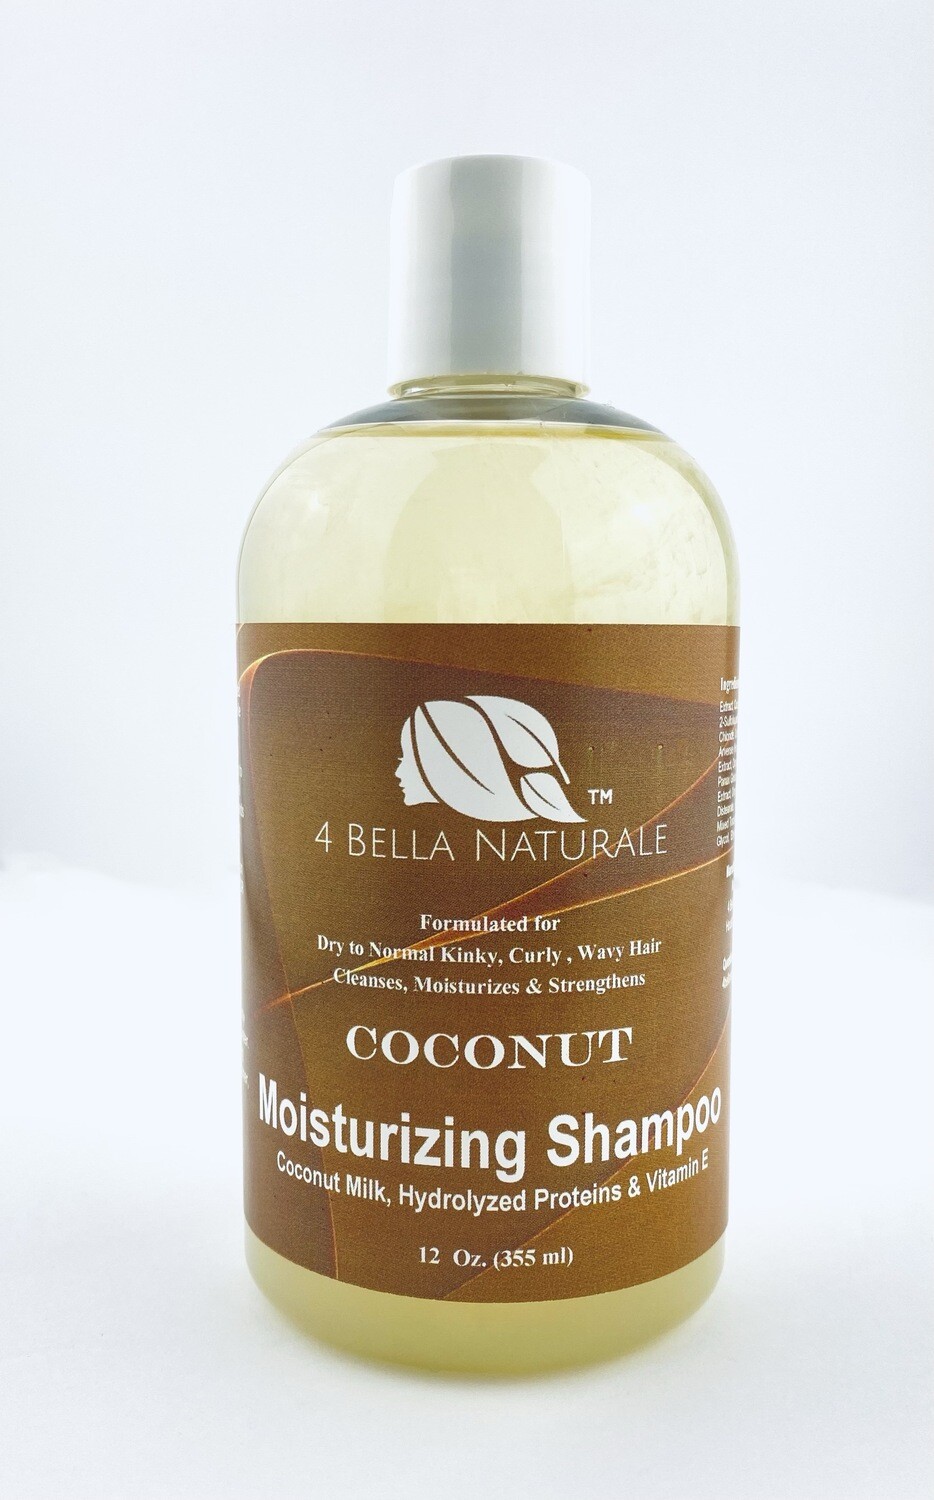 Coconut Moisturizing Shampoo